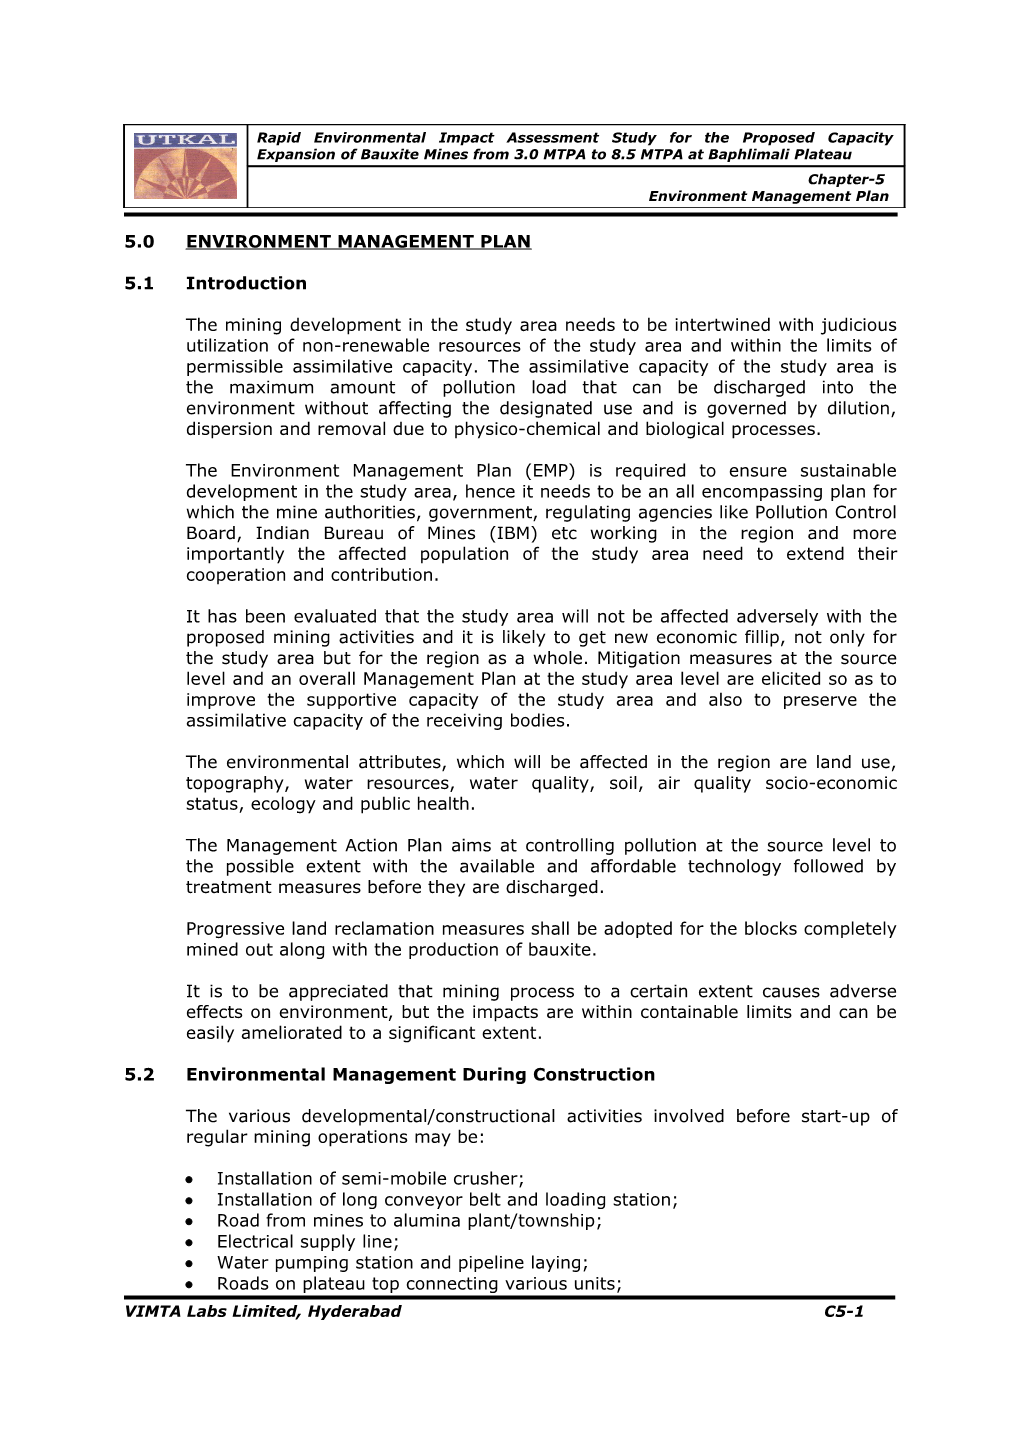 5.0Environment Management Plan